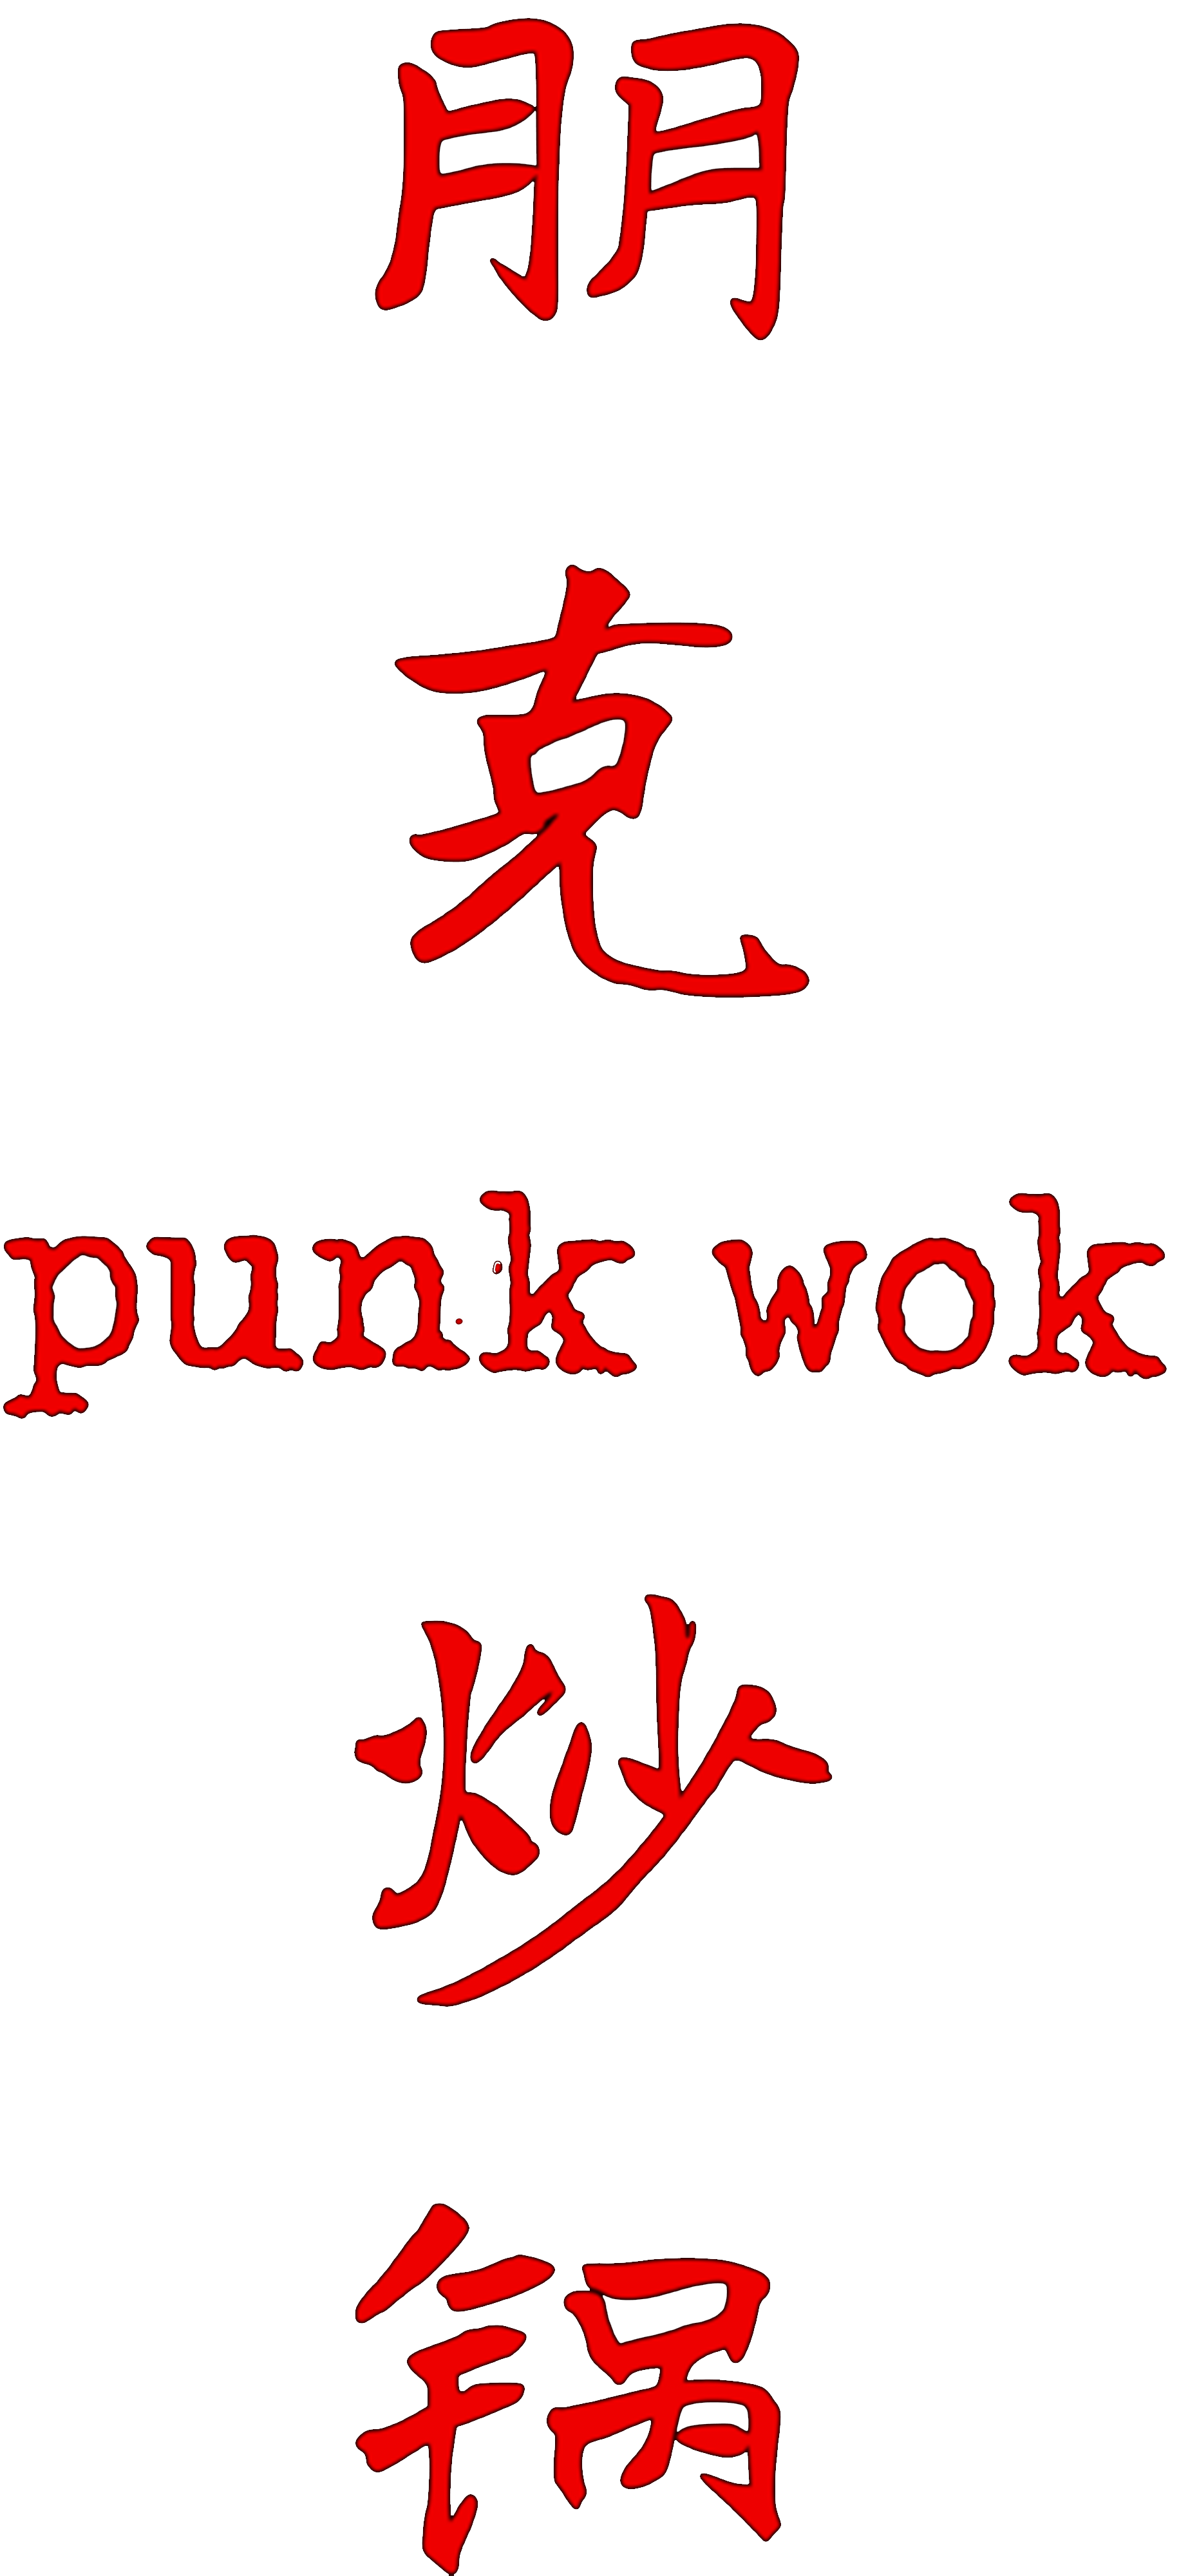 Punk Wok Home